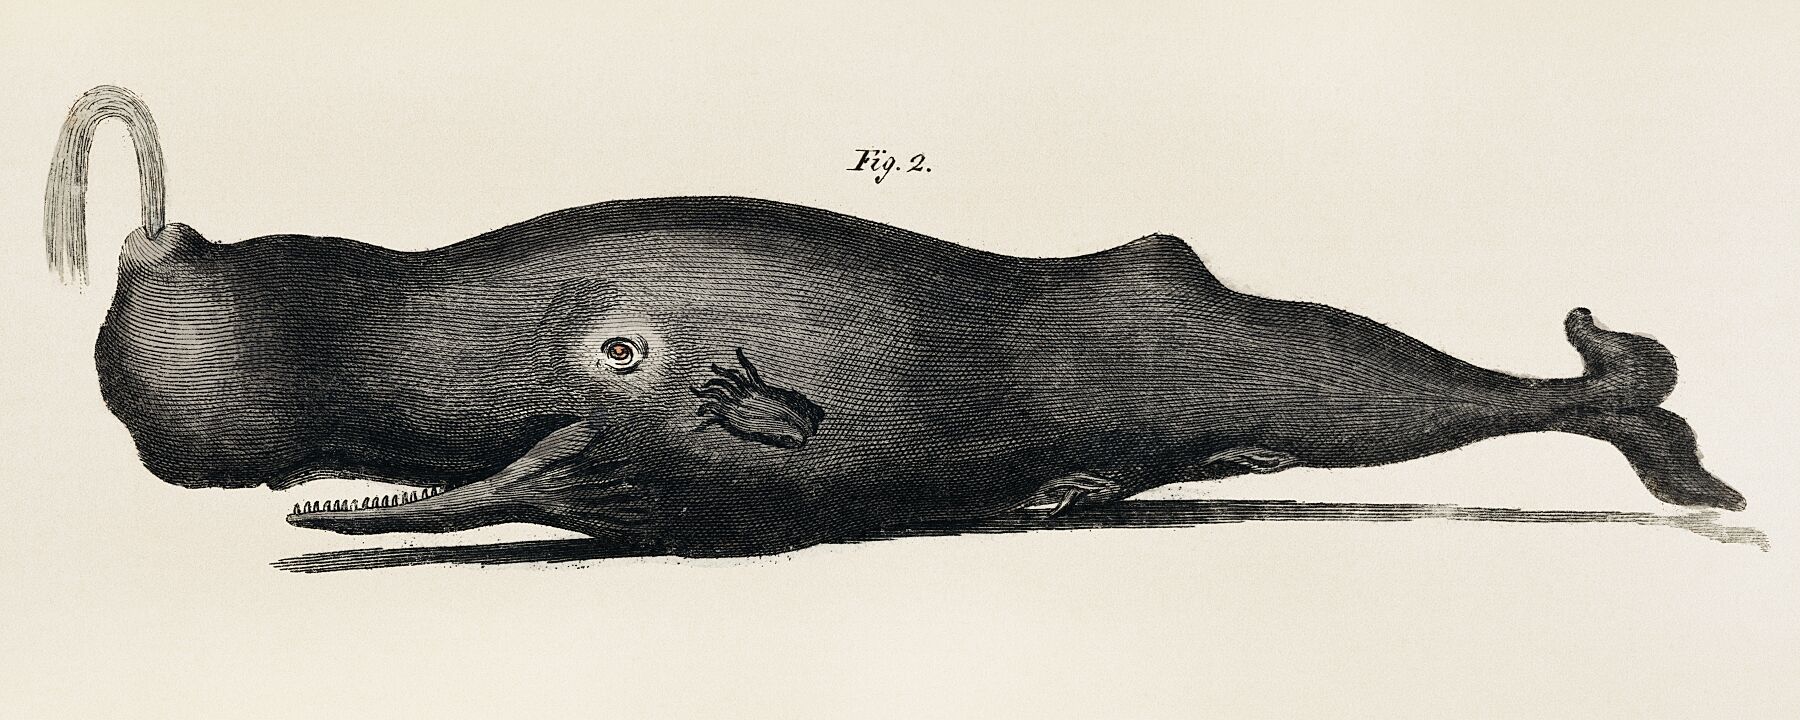 Sperm or trump whale from Friedrich Johann Bertuch's Bilderbuch fur Kinder (Picture Book for Children), Weimar, 1802